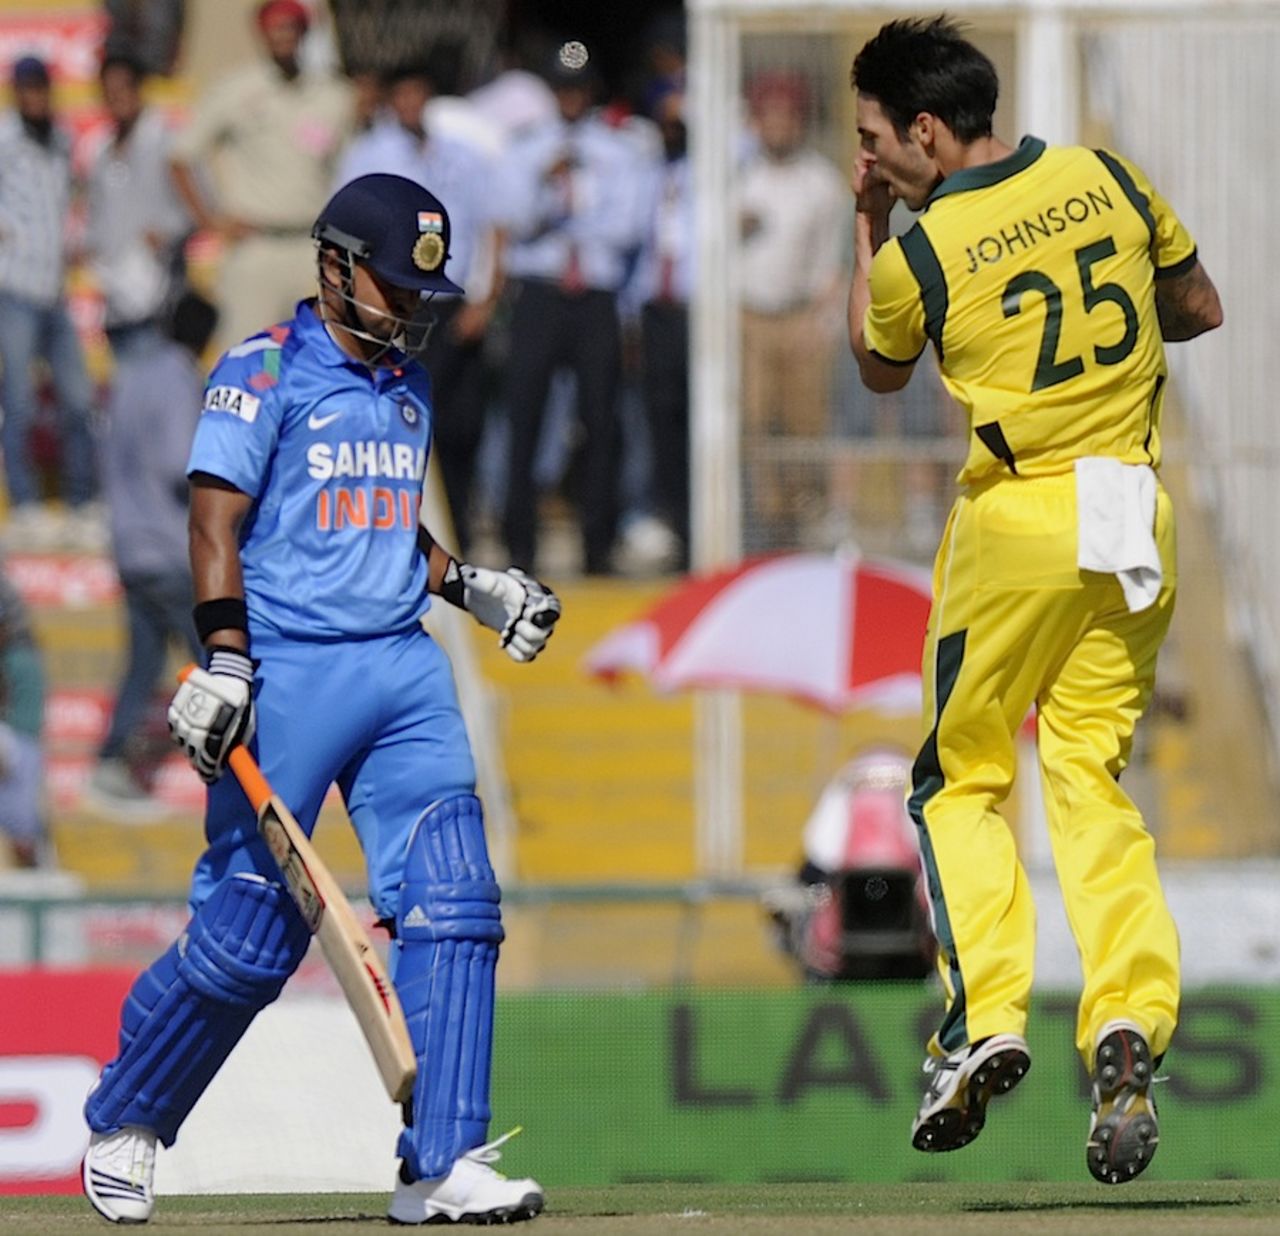 Mitchell Johnson nipped off Suresh Raina with a short one, India v Australia, 3rd ODI, Mohali, October 19, 2013